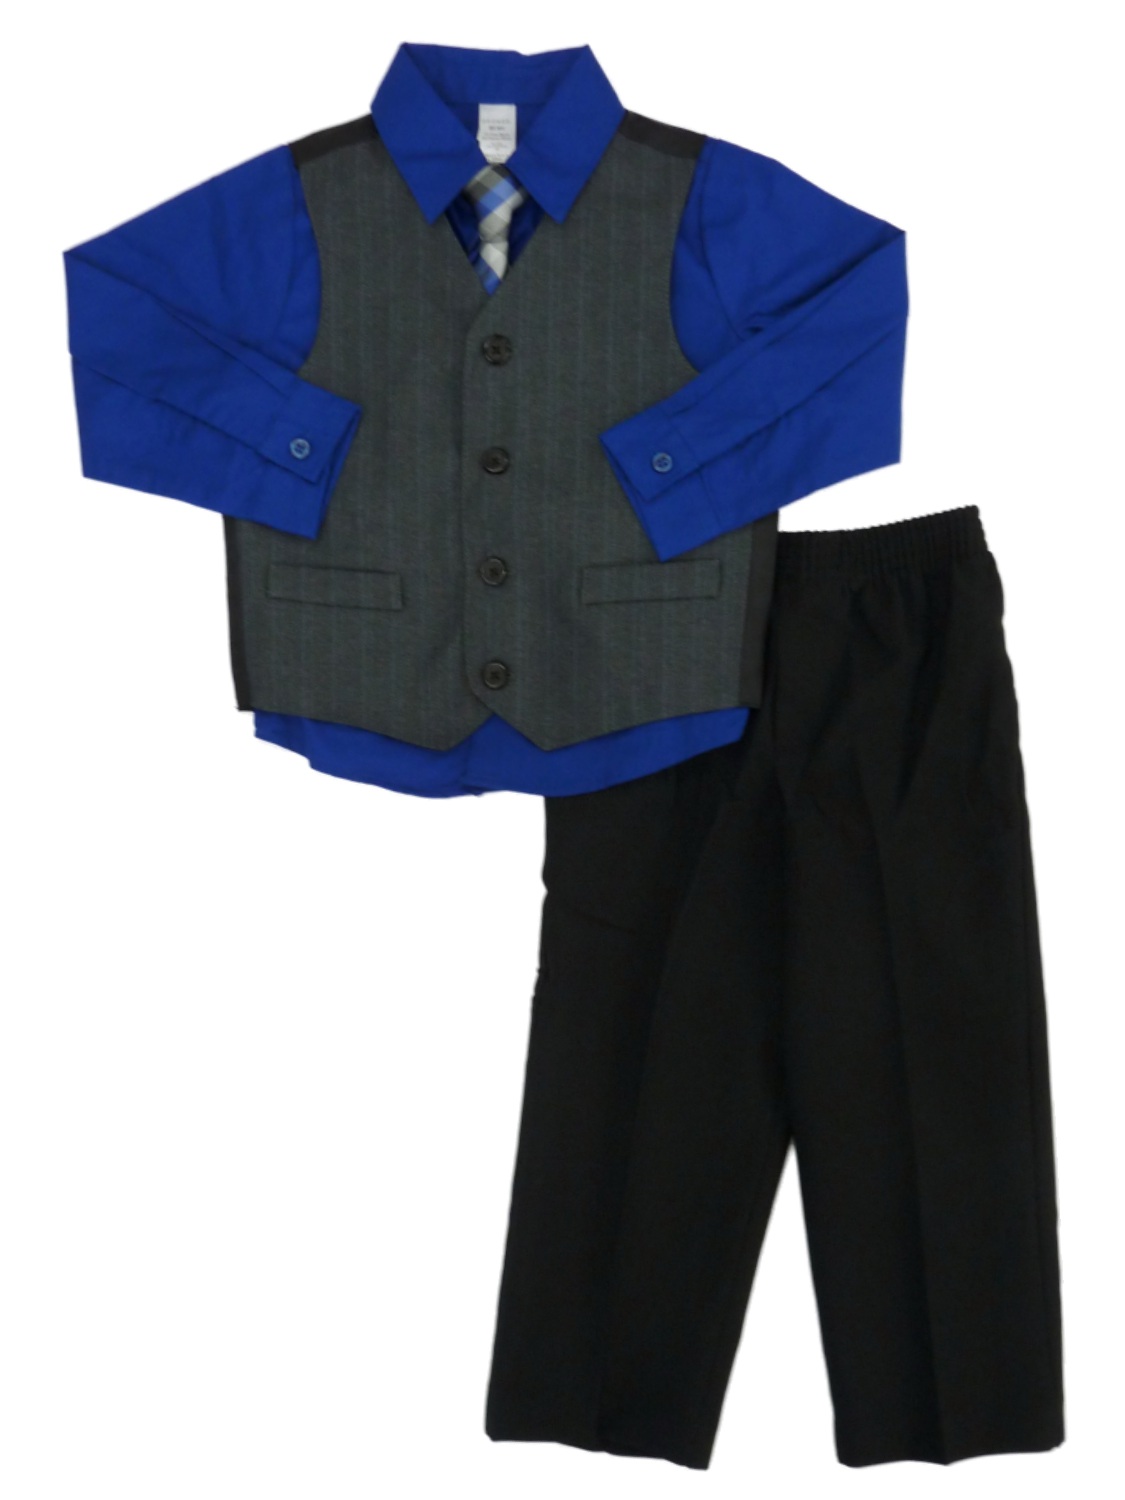 George Infant & Toddler Boys Blue Shirt Vest Tie & Pants 4P Dress Up Outfit